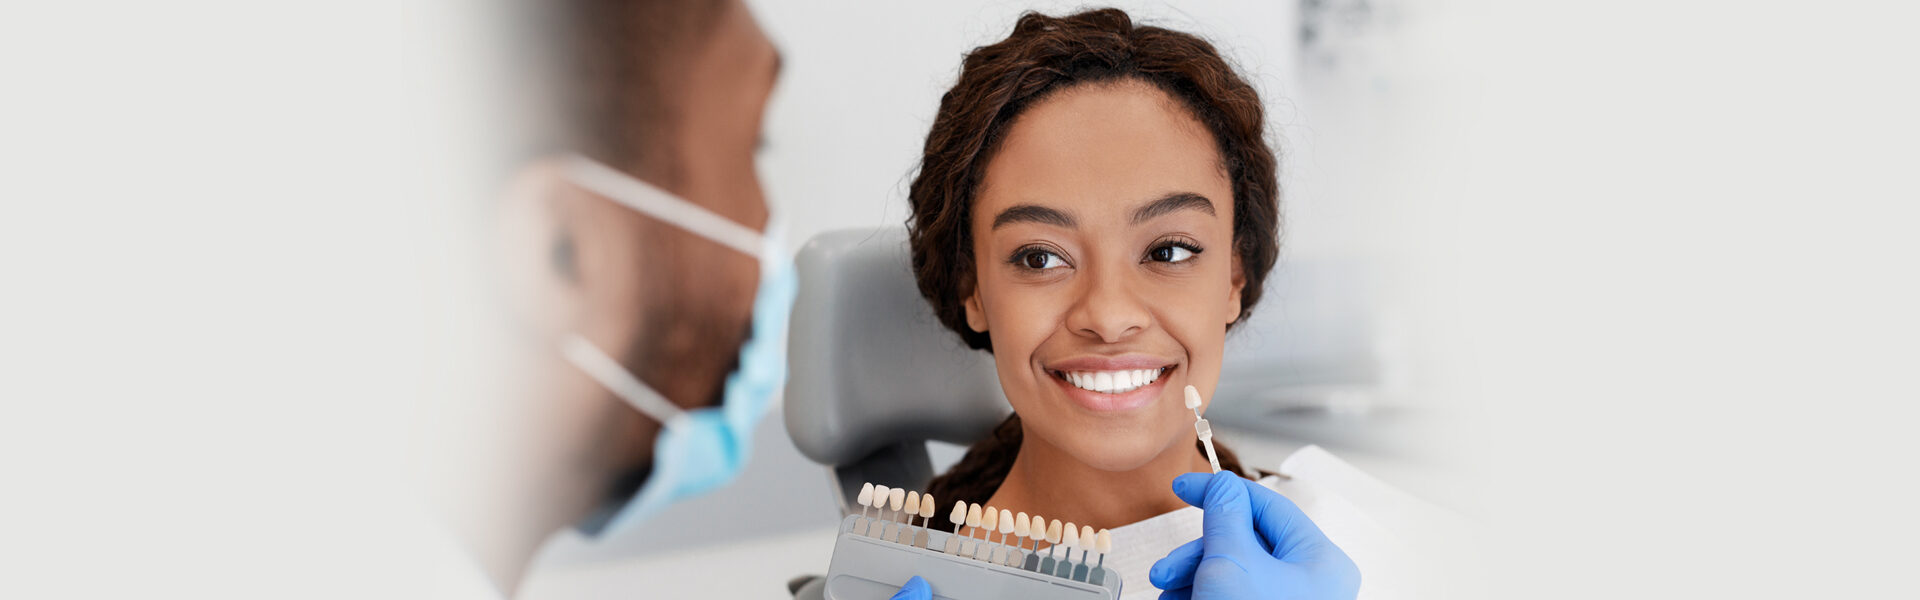 Dental Veneers: Procedure, Types, and After-Care